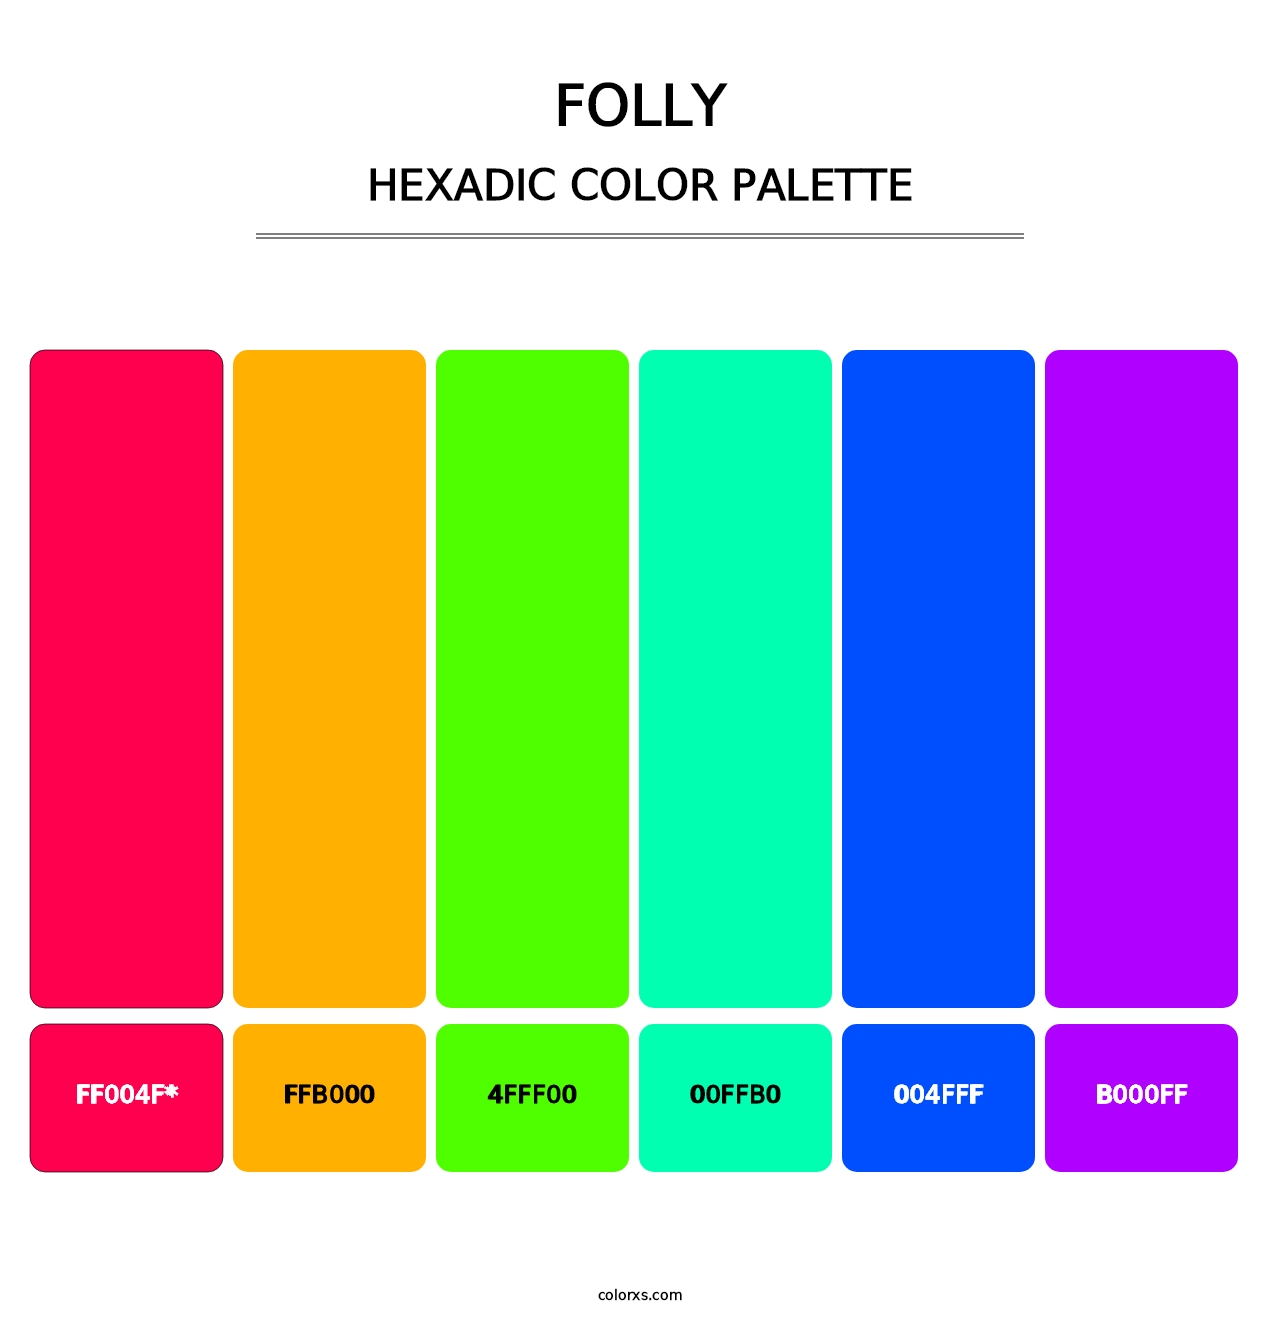 Folly - Hexadic Color Palette